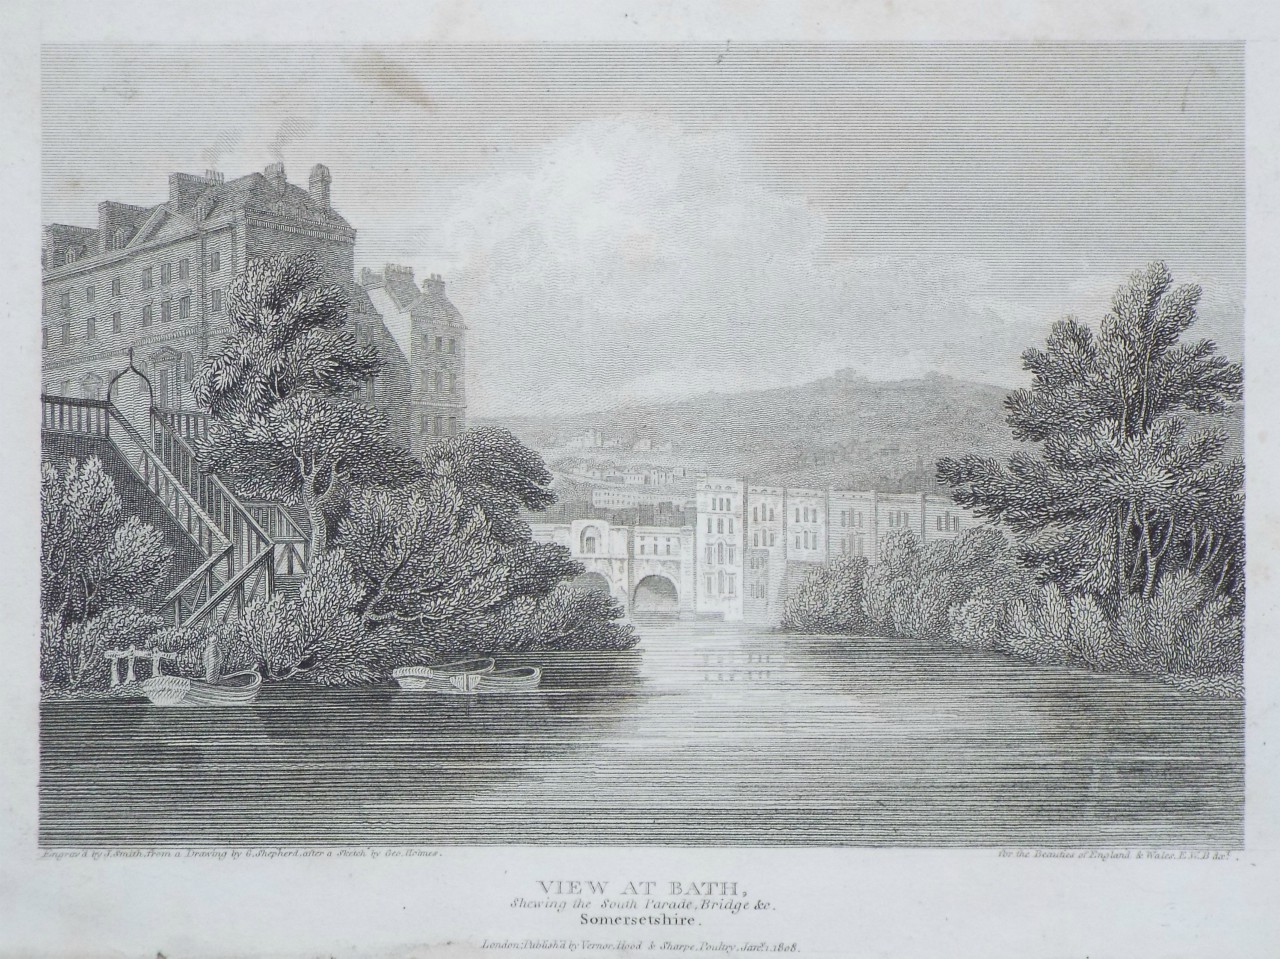 Print - View at Bath, Shewing the South Parade, Bridge &c. Somersetshire. - Smith